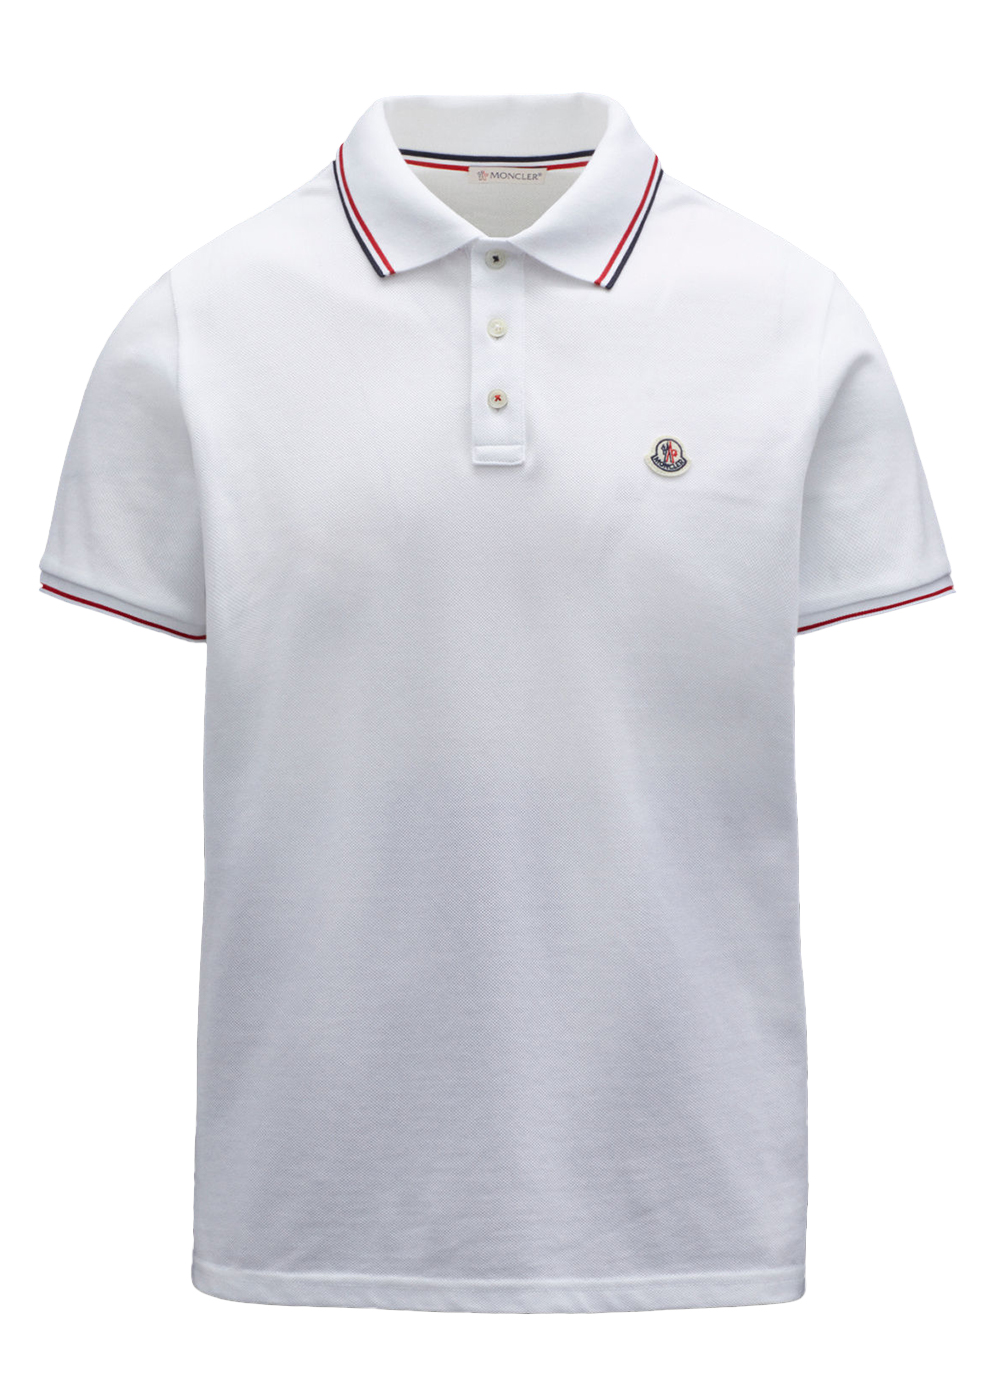 Moncler Logo Polo Shirt White/Red/Black -